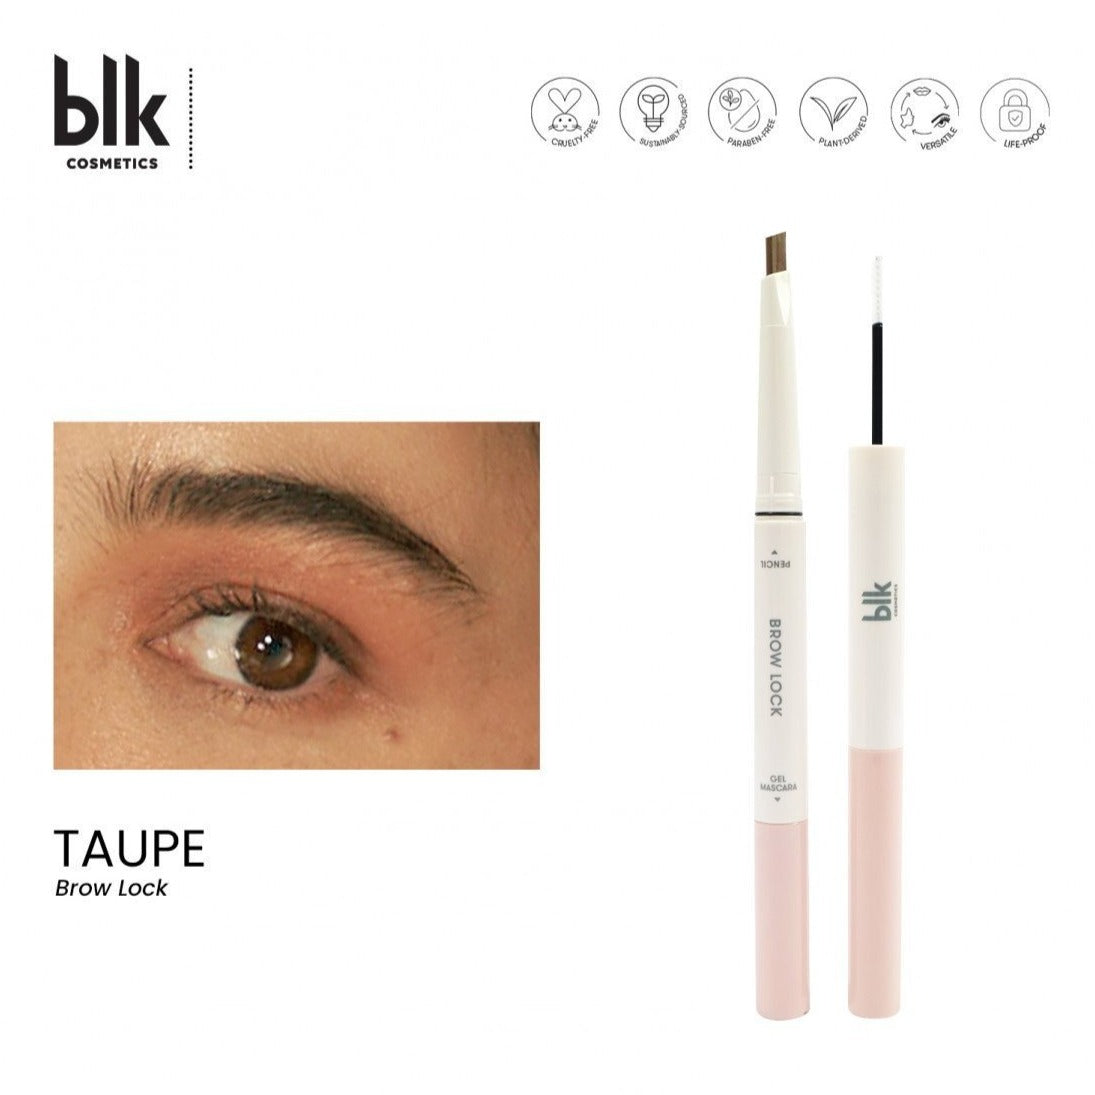 blk Cosmetics Daydream Brow Lock - Pencil + Gel Mascara (Taupe)